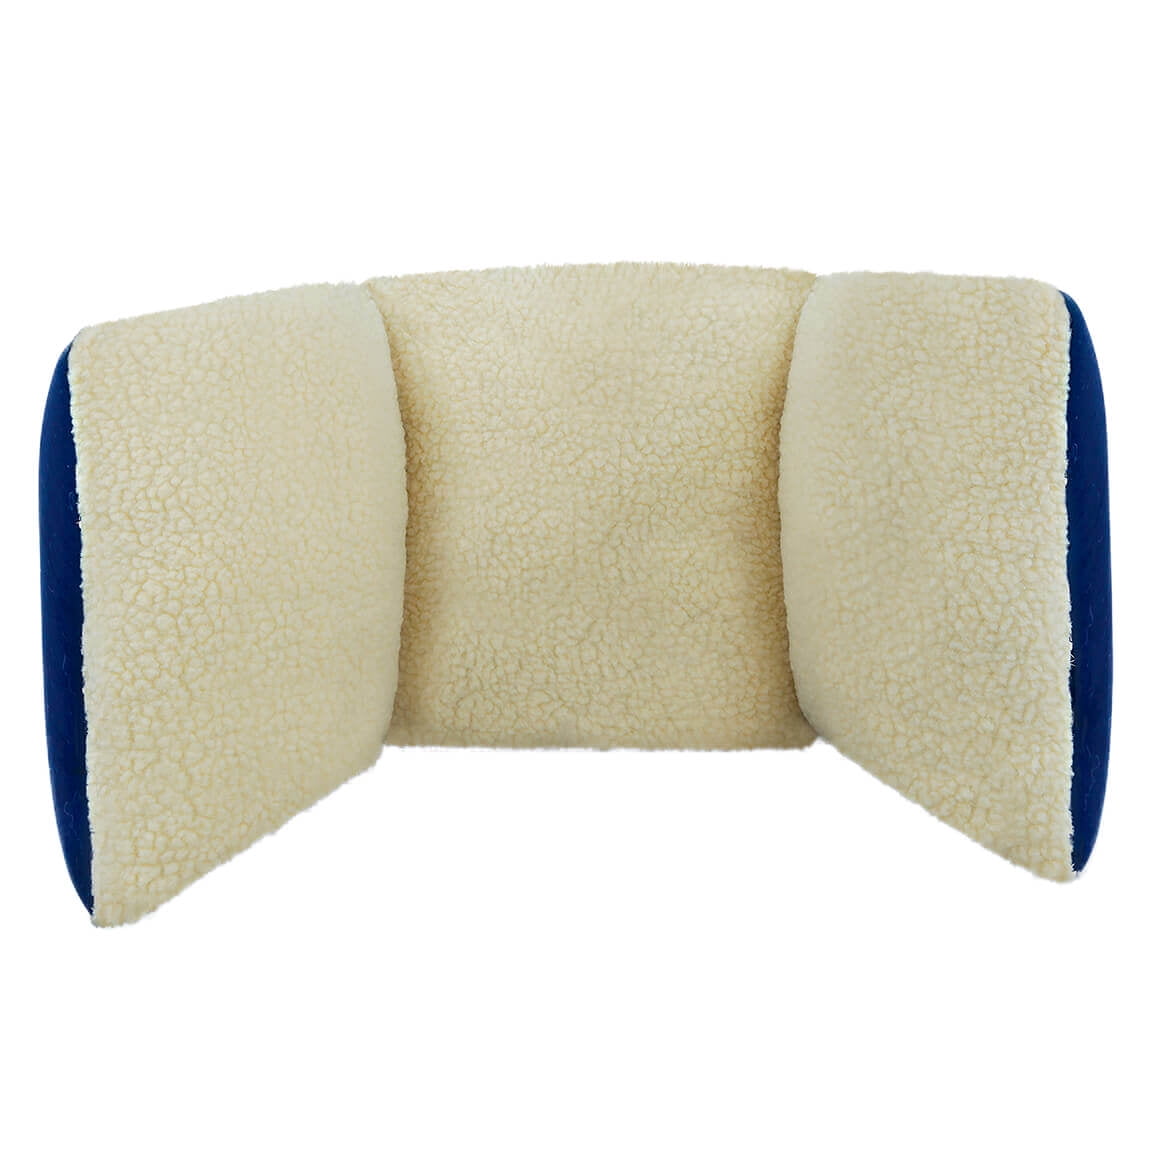 25 Adjustable Lumbar Cushion Back Support Pillow Cushion Home